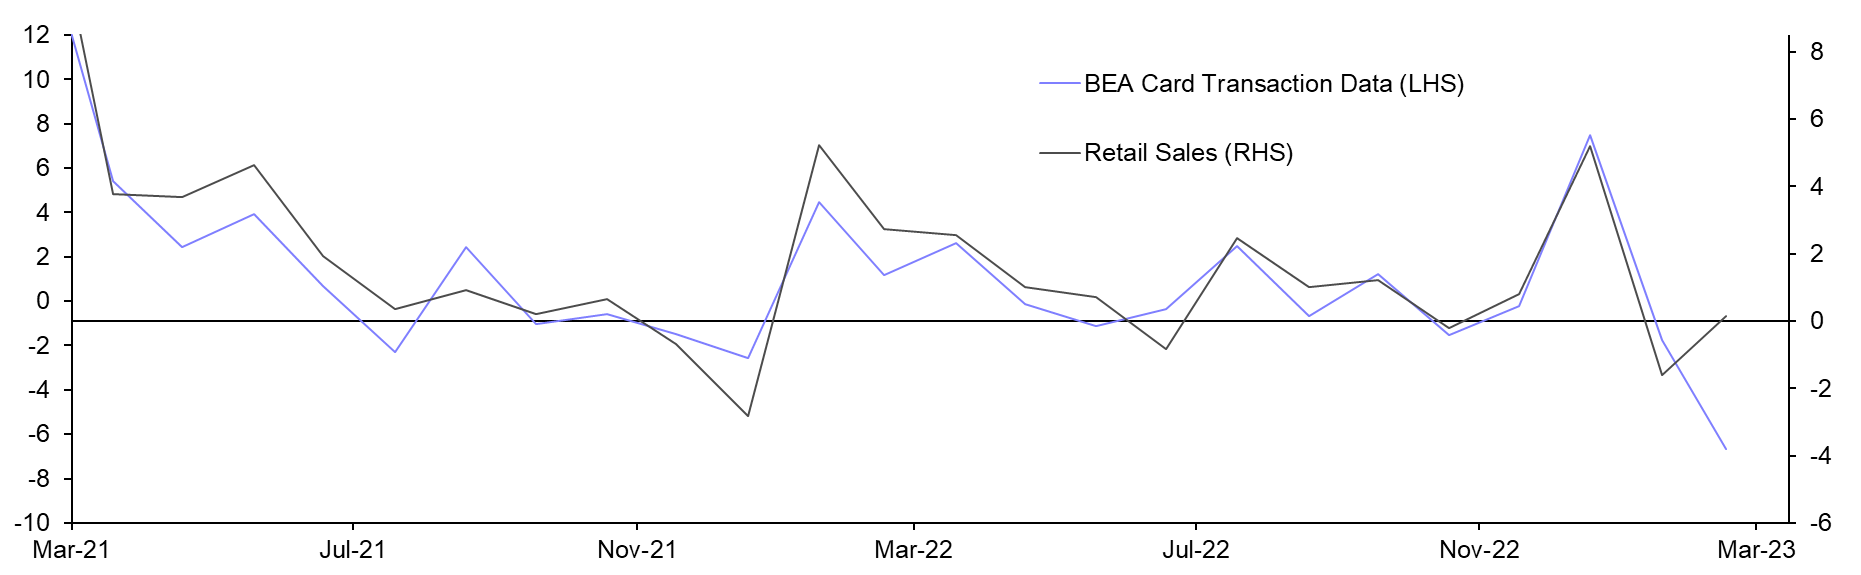 Retail Sales (Mar.)
